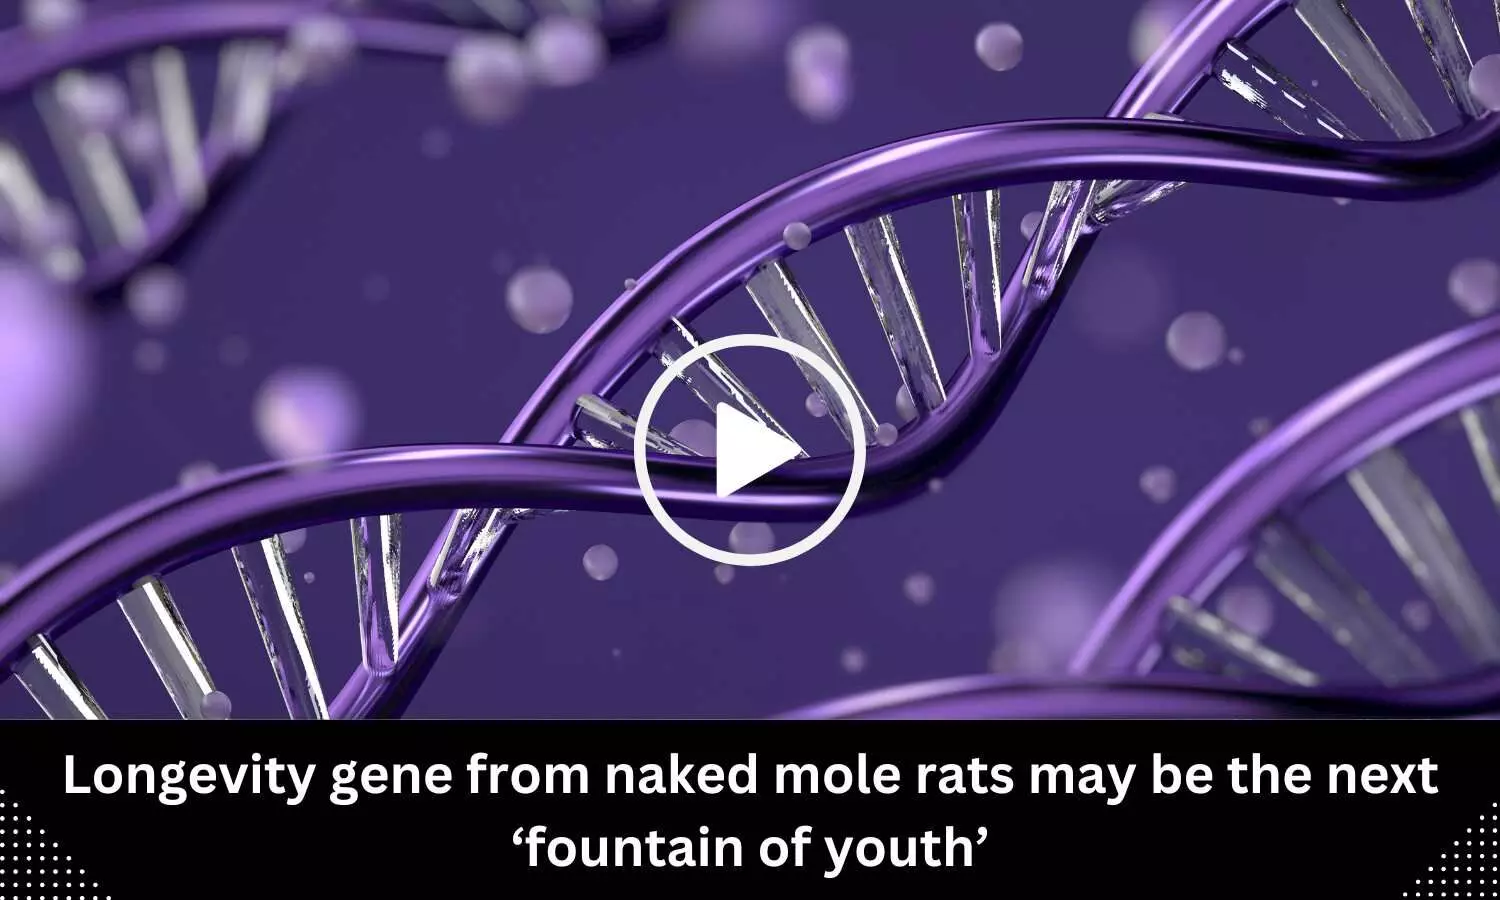 Longevity gene from naked mole rats may be the next fountain of youth